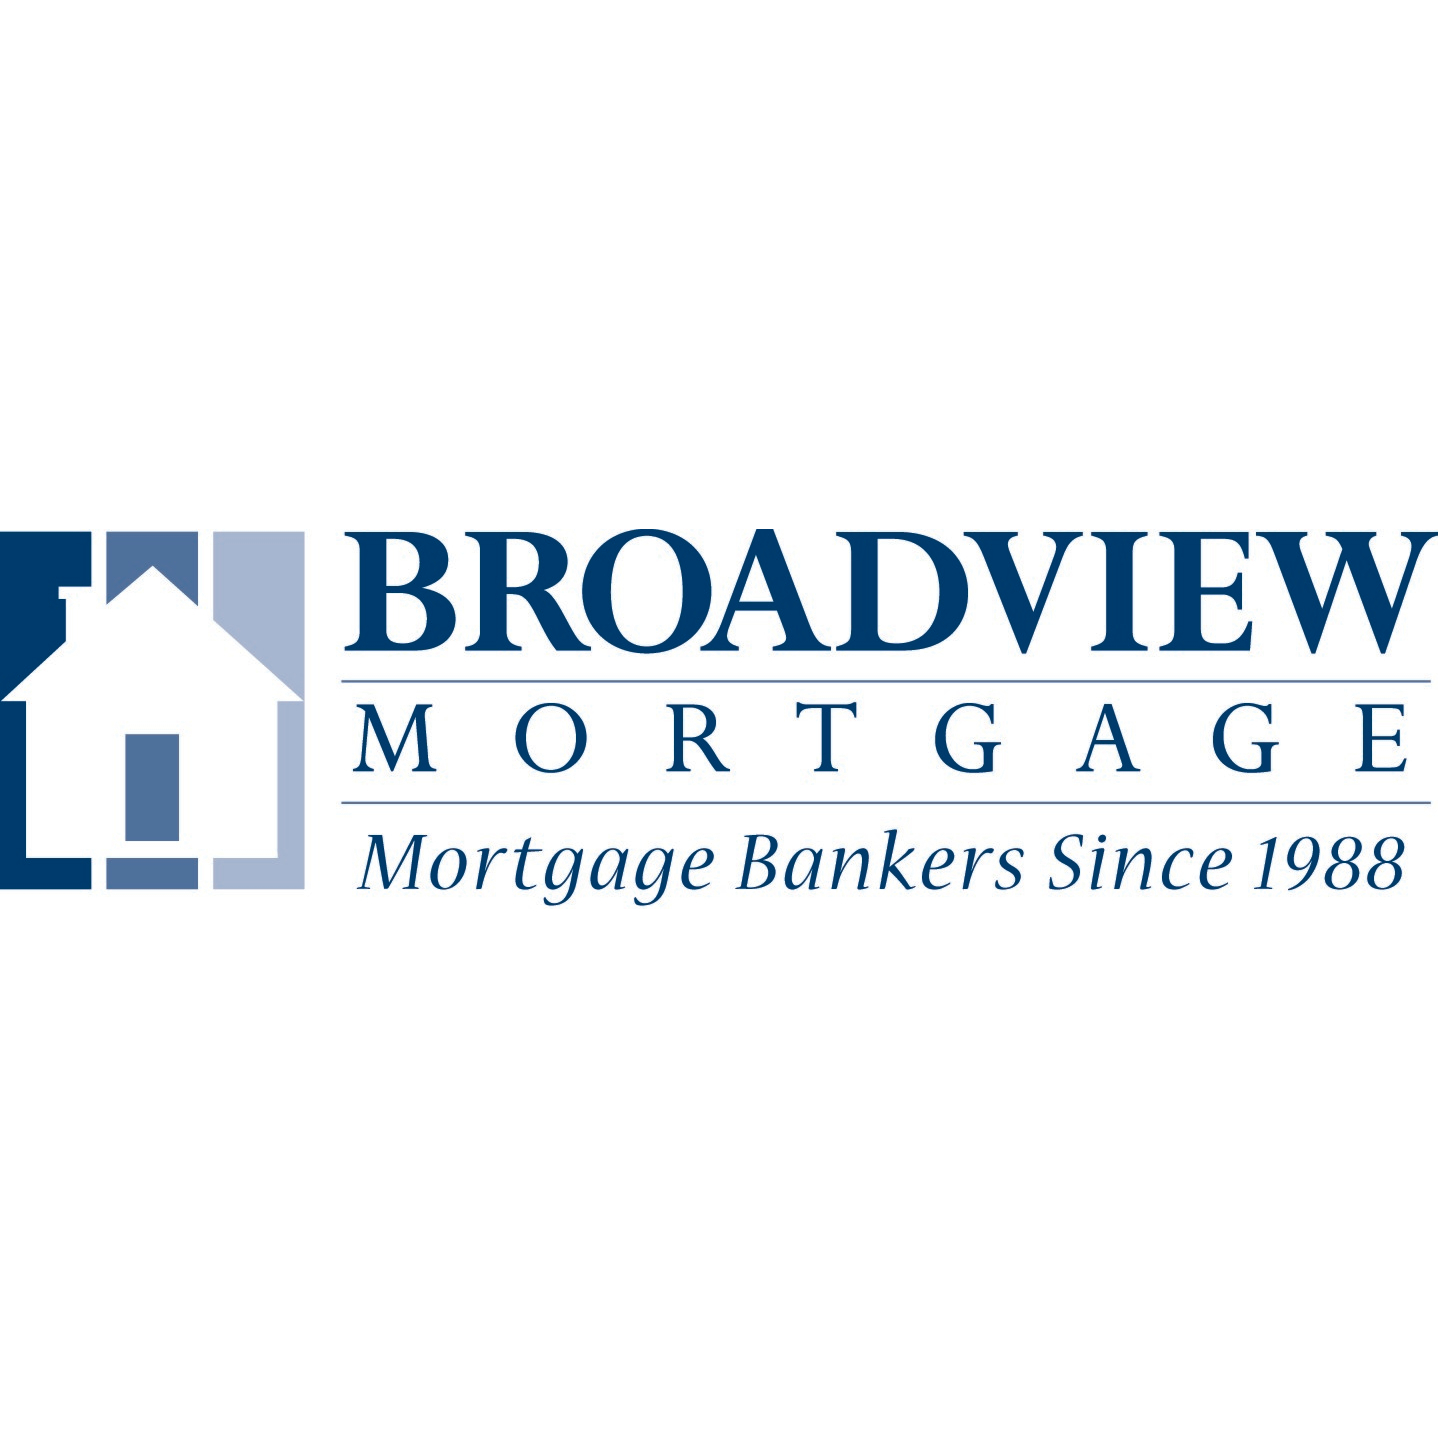 Broadview Mortgage Orange